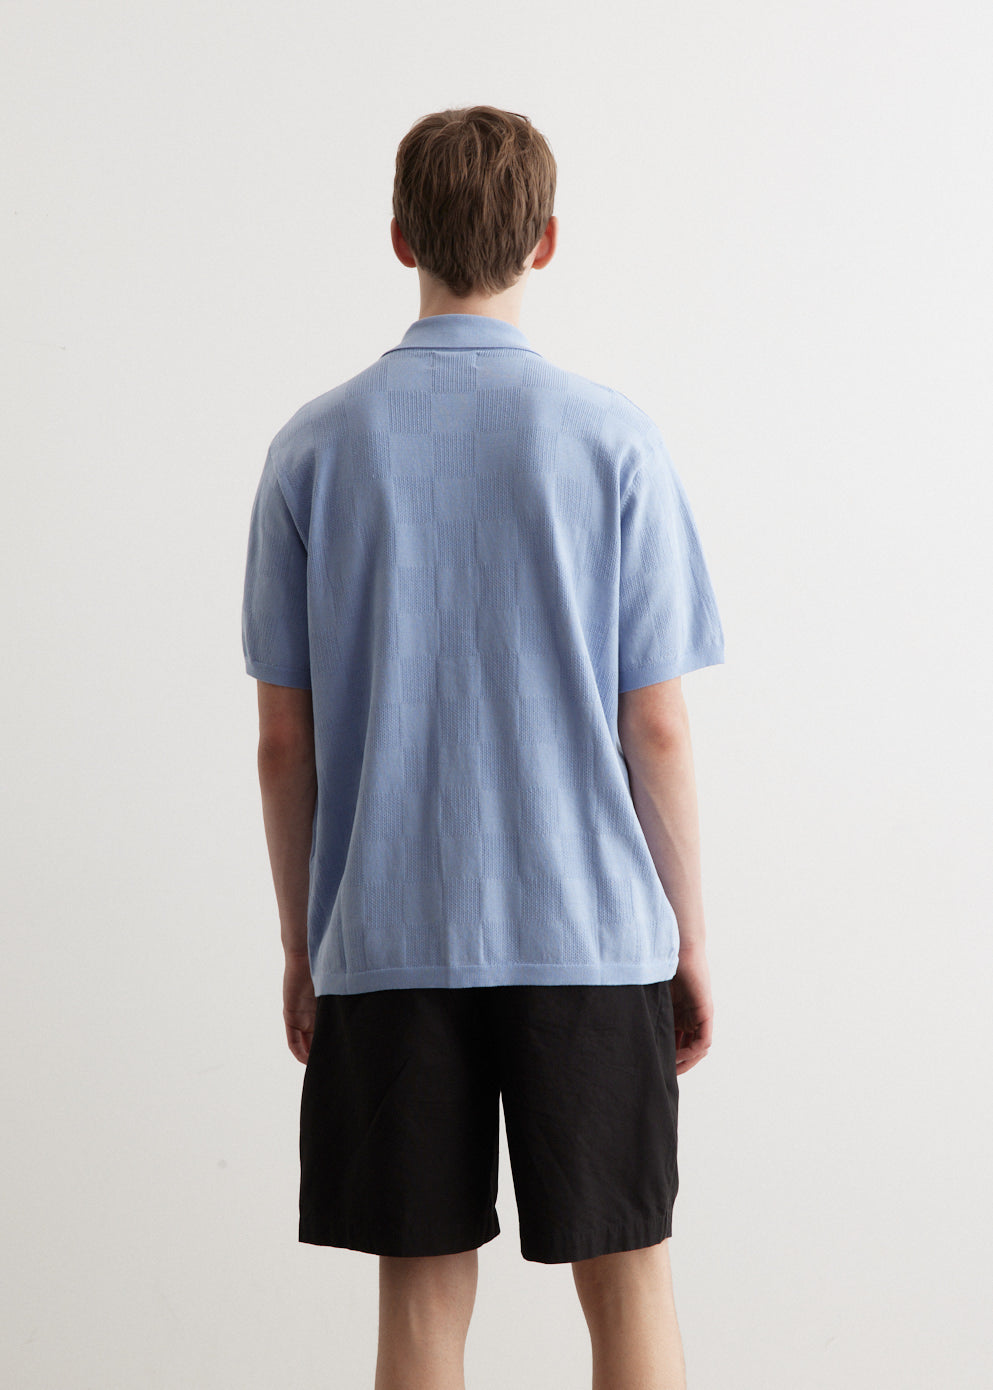 Kenneth Checkerboard Knit Short Sleeve Shirt